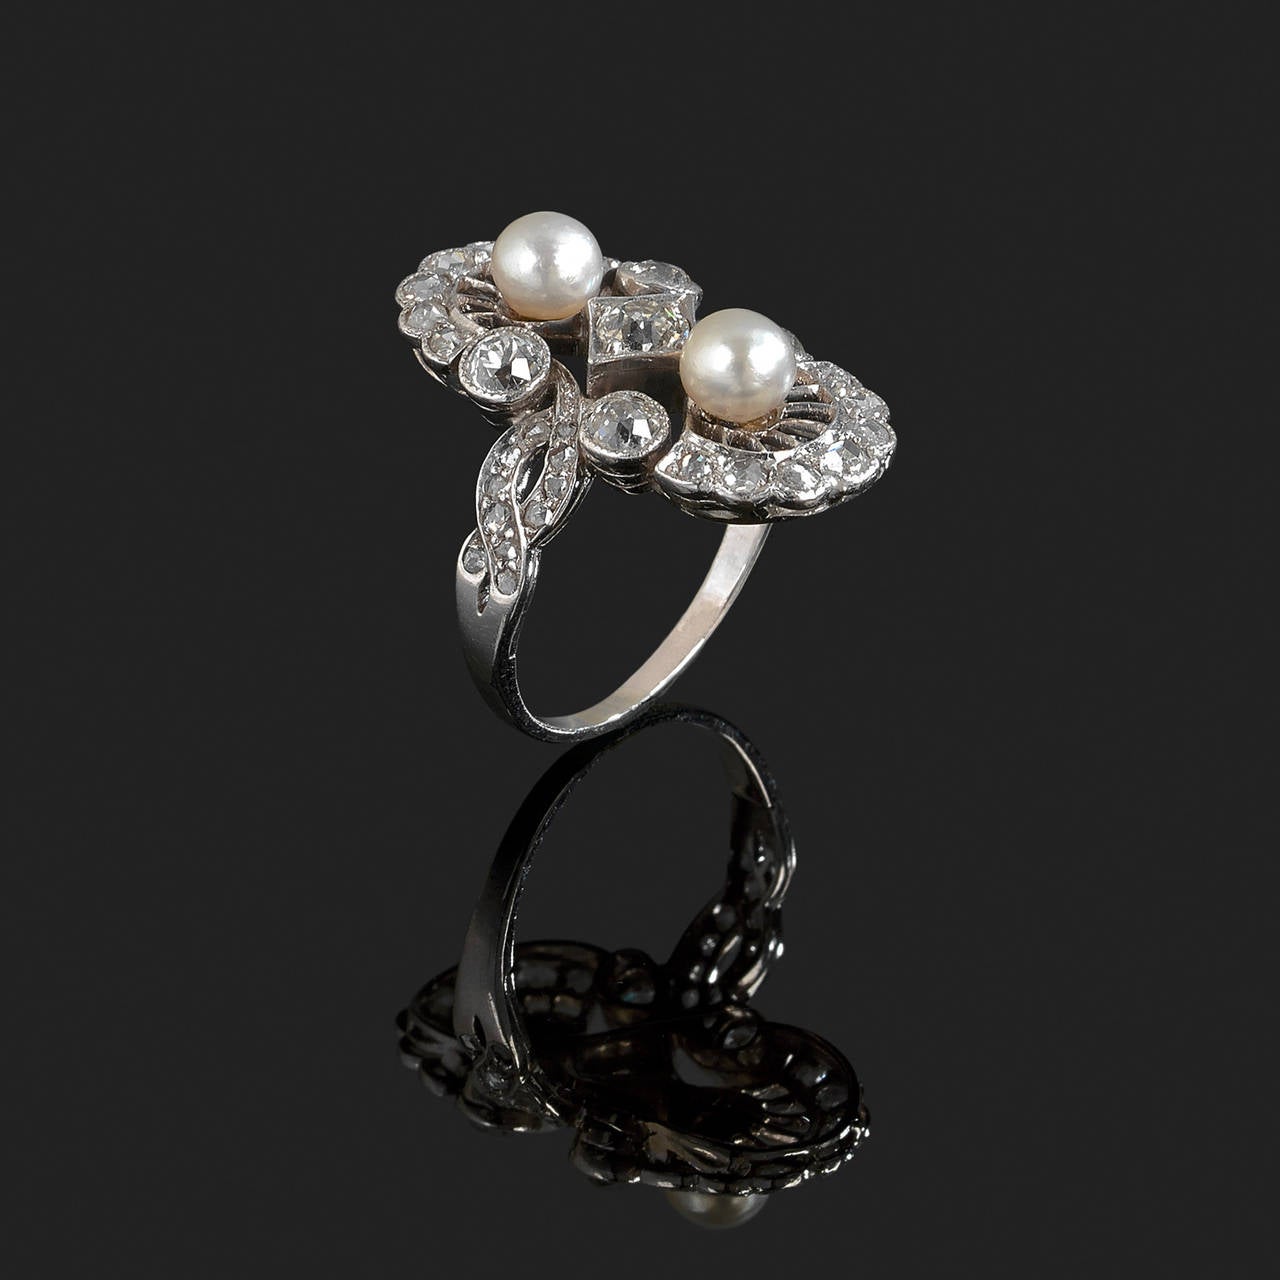 A diamonds, natural pearls and platinum ring. Circa 1910 / 1920.
Total diamonds weight: 0.7 ct